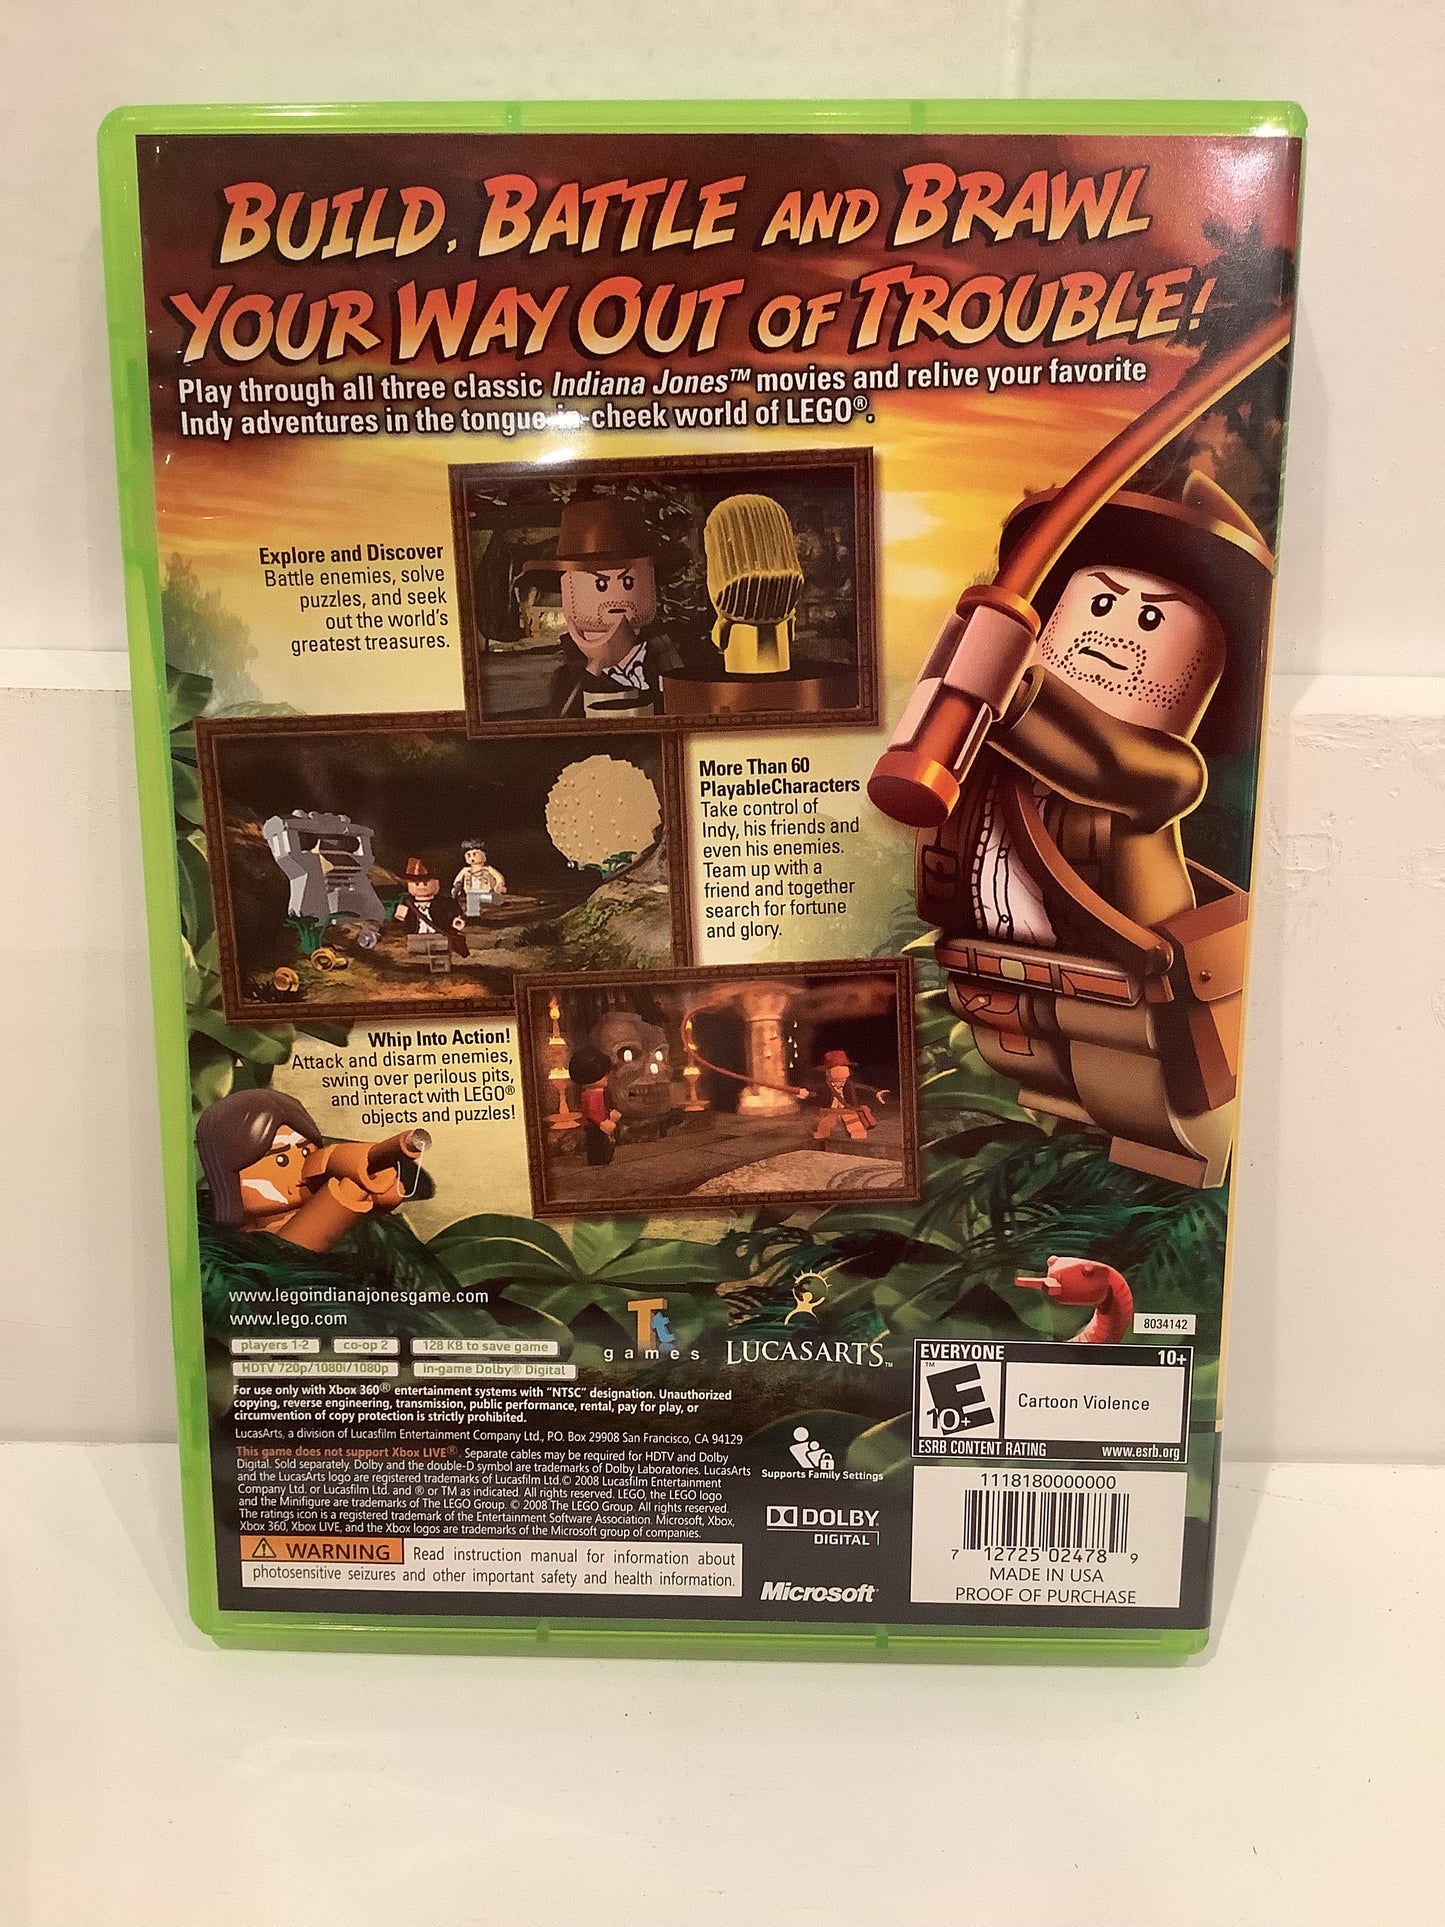 LEGO Indiana Jones The Original Adventures - Xbox 360